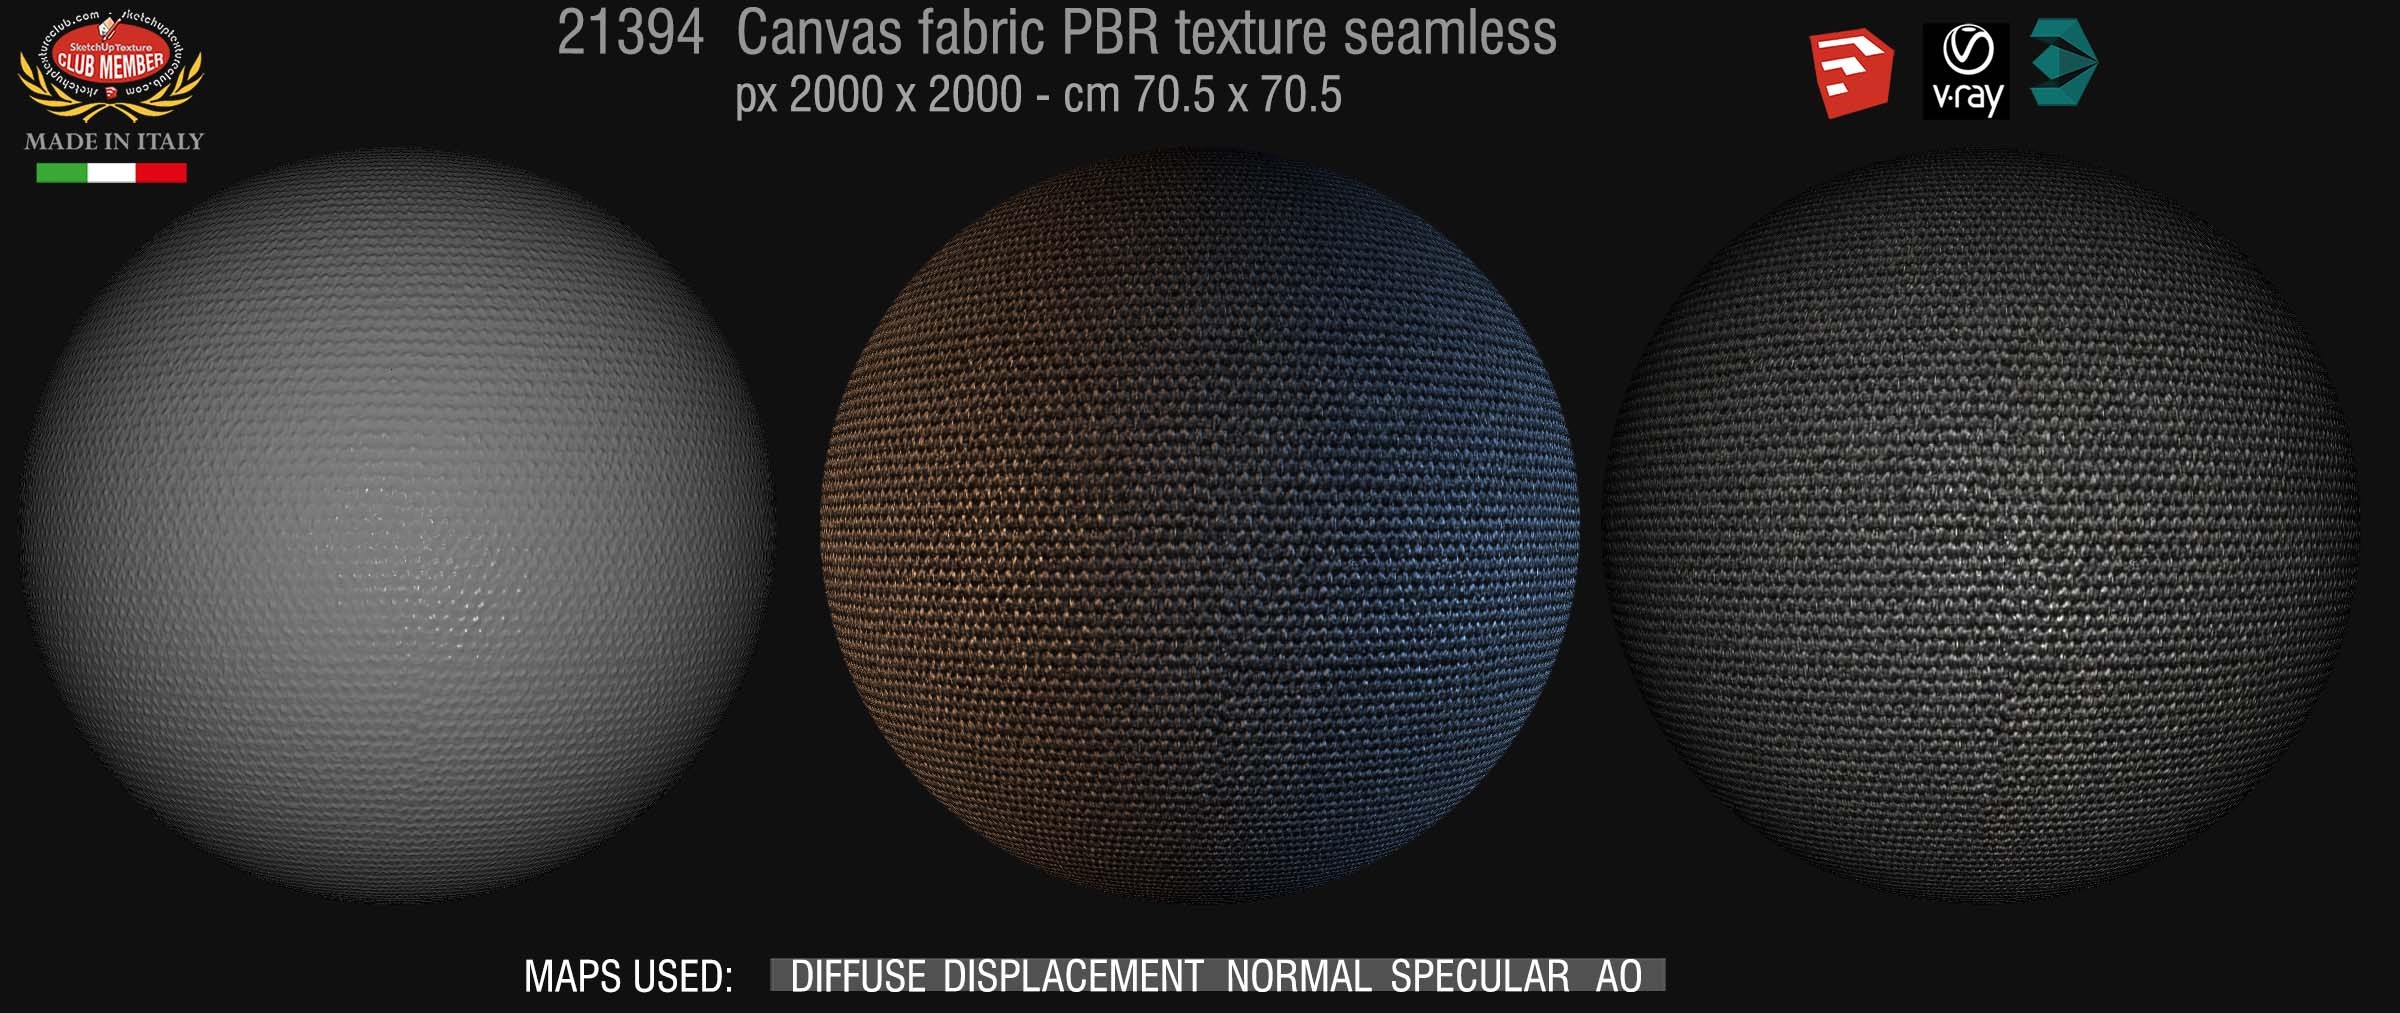 20394 Canvas fabric PBR texture seamless DEMO